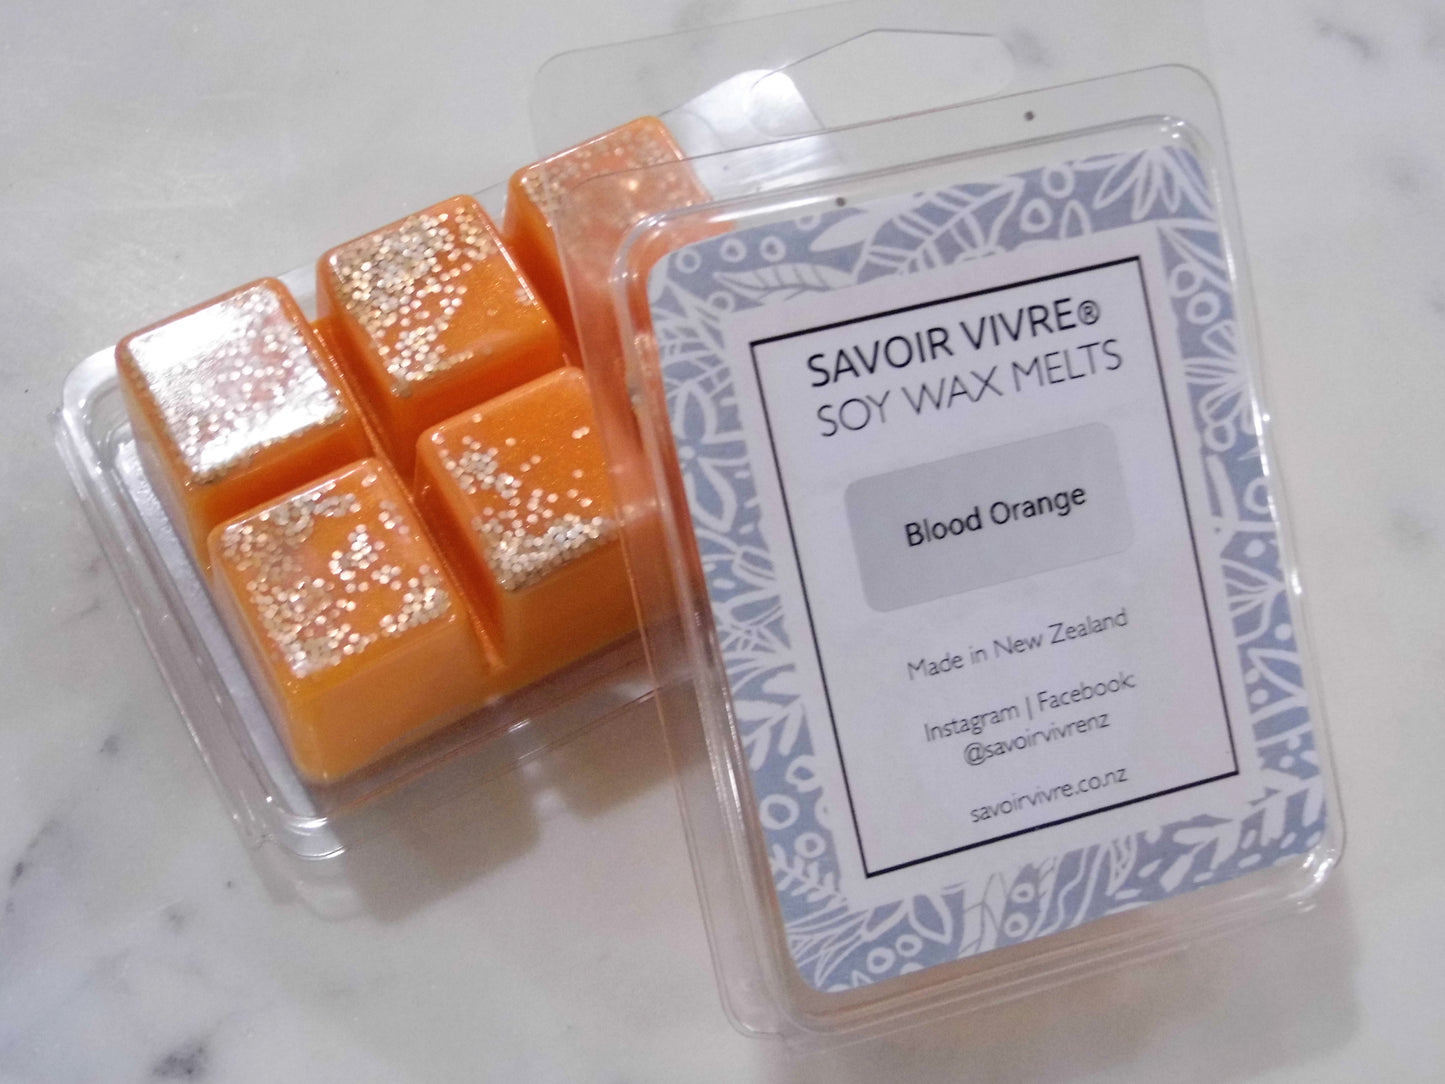 Savoir Vivre Soy Wax Melts NZ -Blood Orange